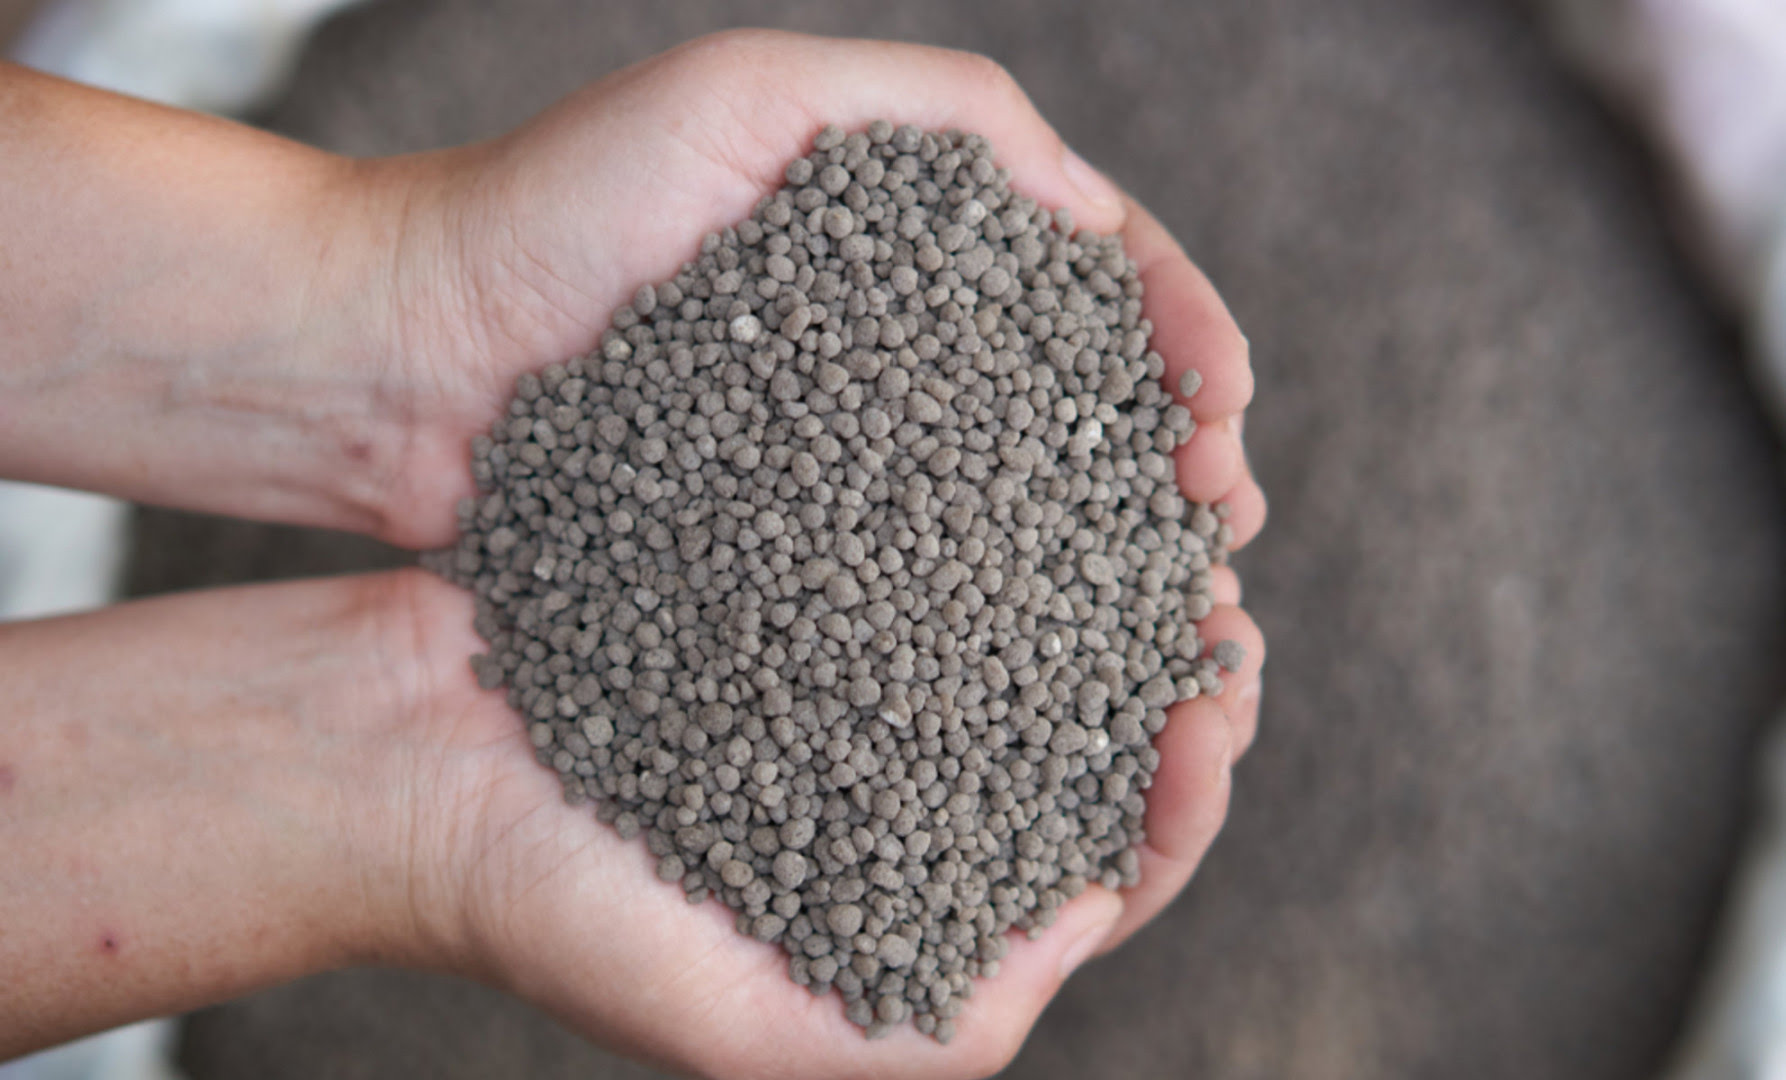 A corruption scandal: 1000 tons of DAP fertilizer are carcinogenic